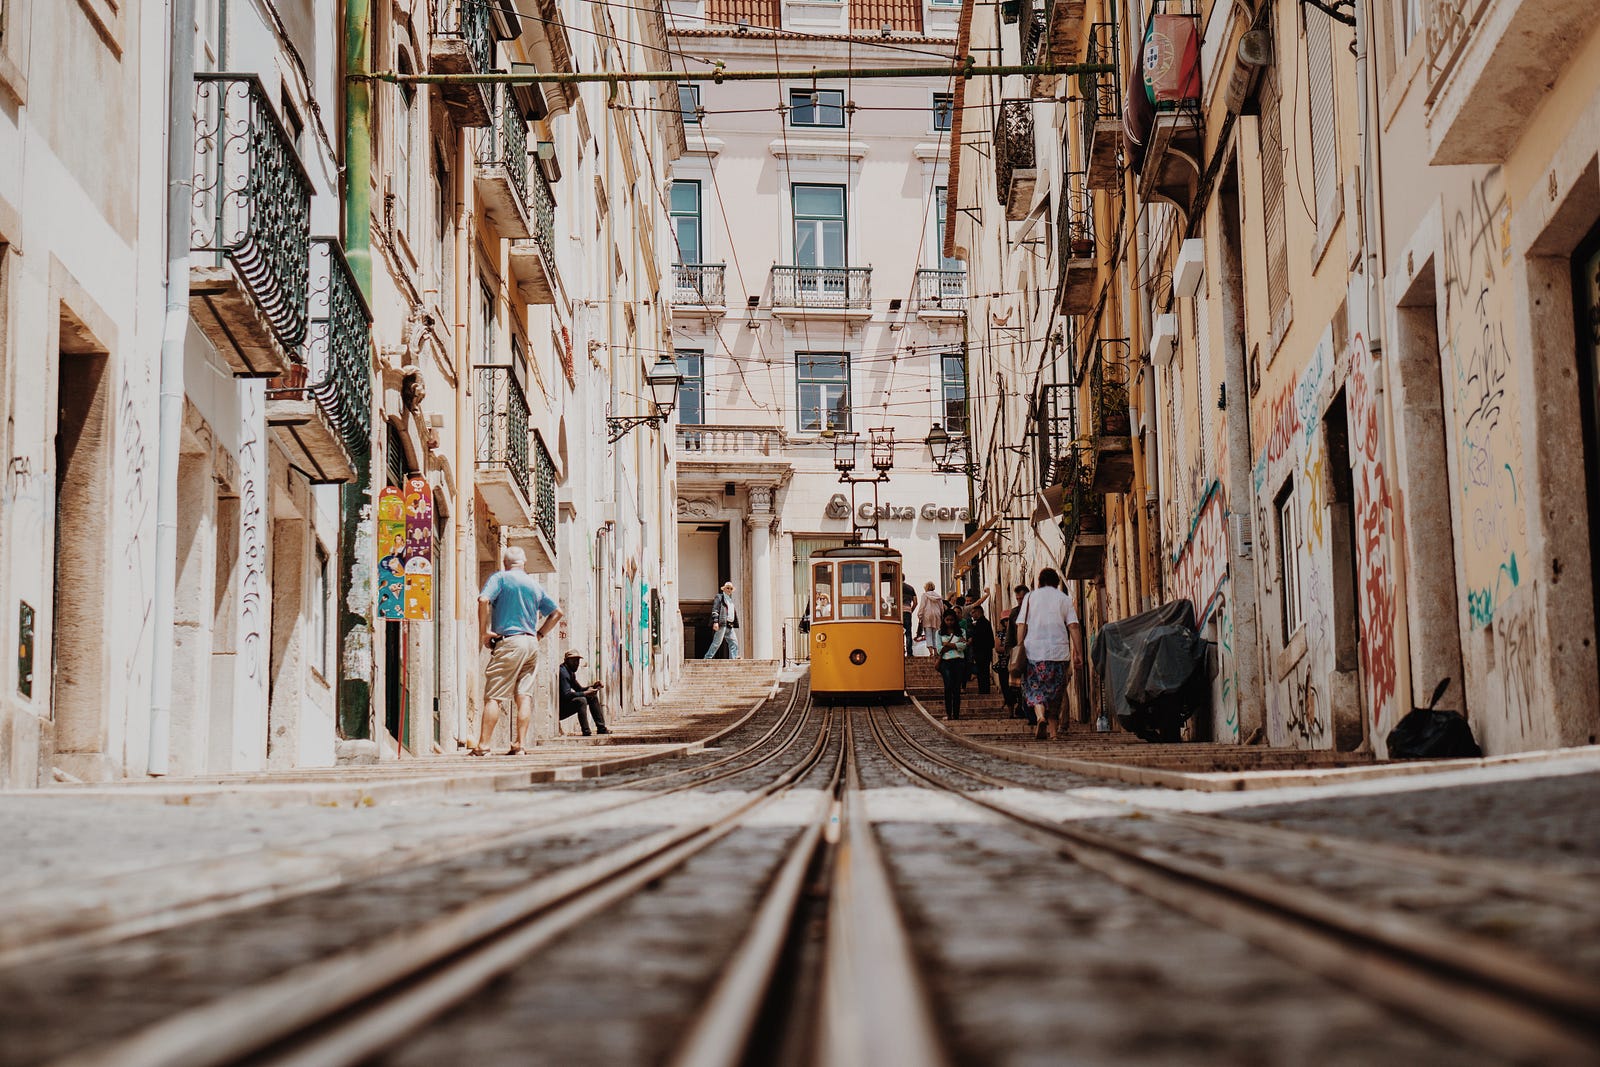 A tram in Lisbon with grafiti